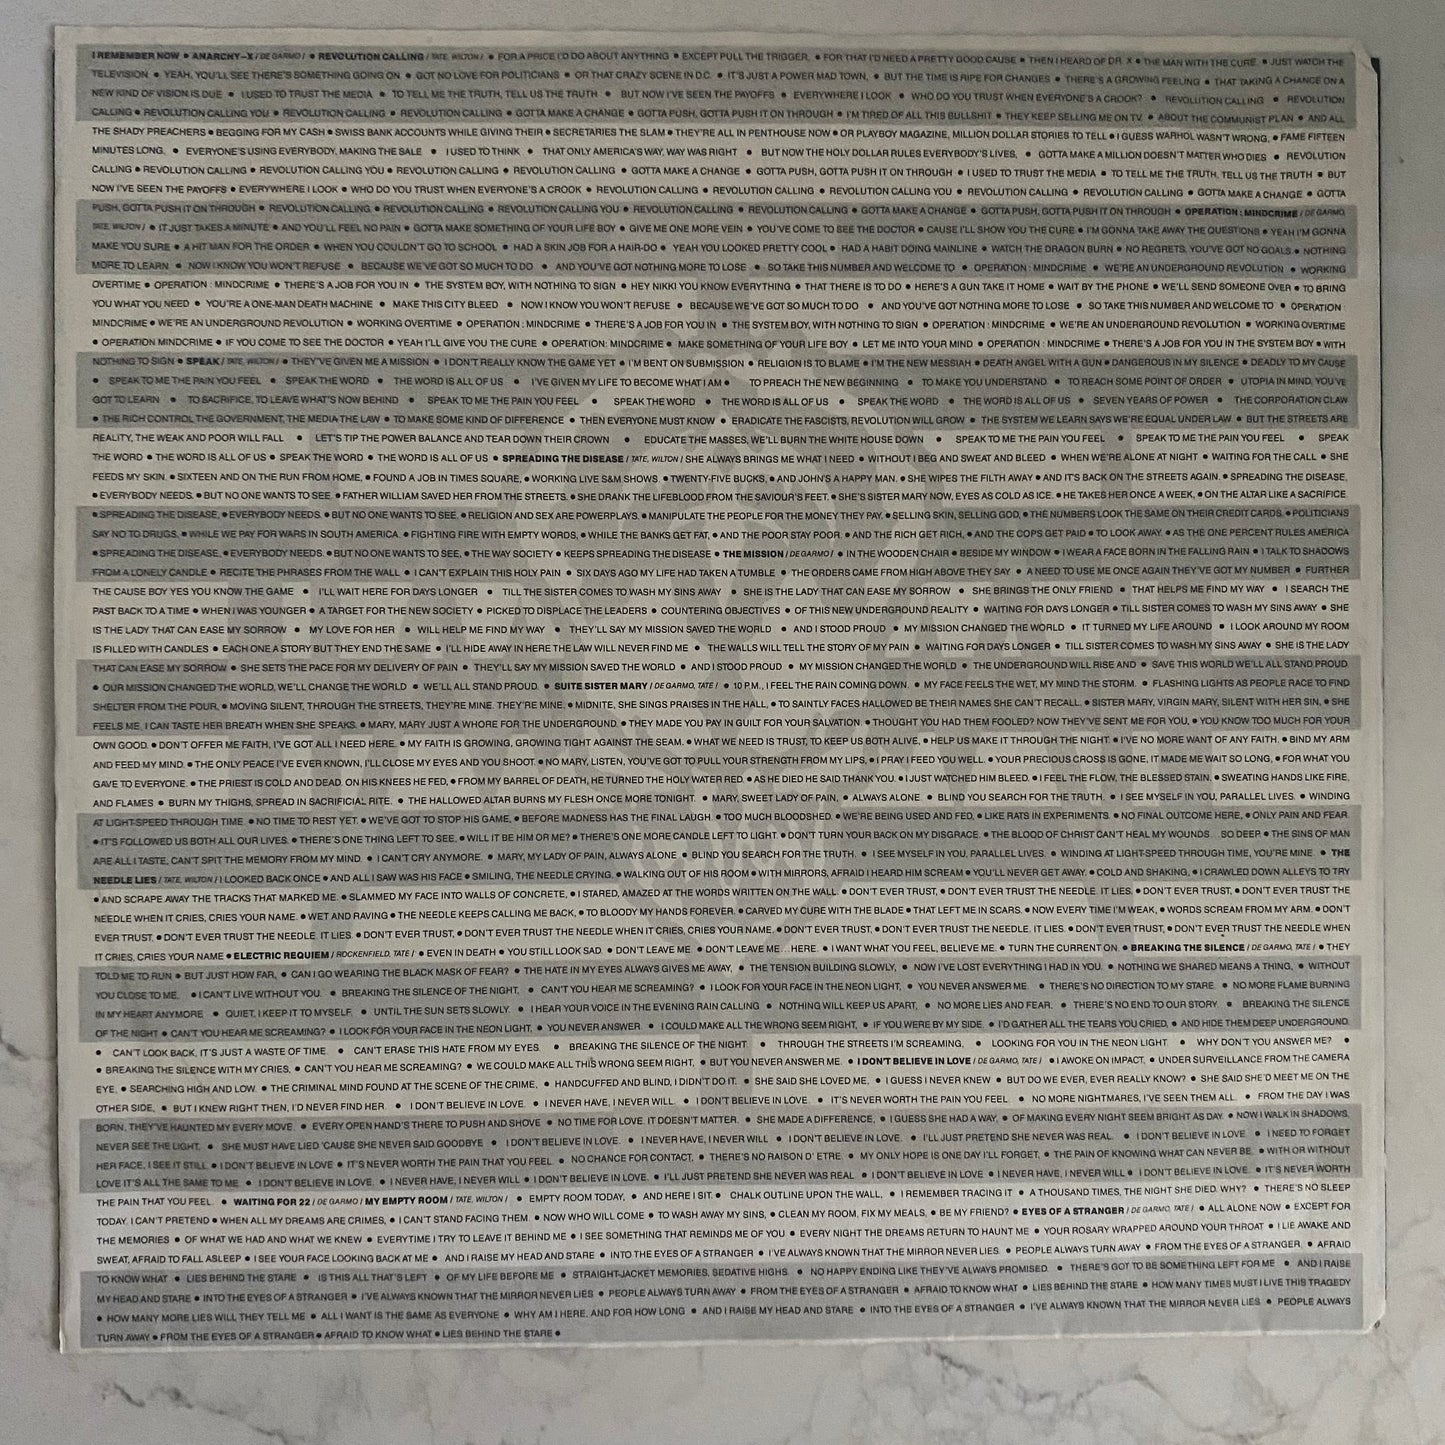 Queensrÿche - Operation: Mindcrime (LP, Album) ROCK